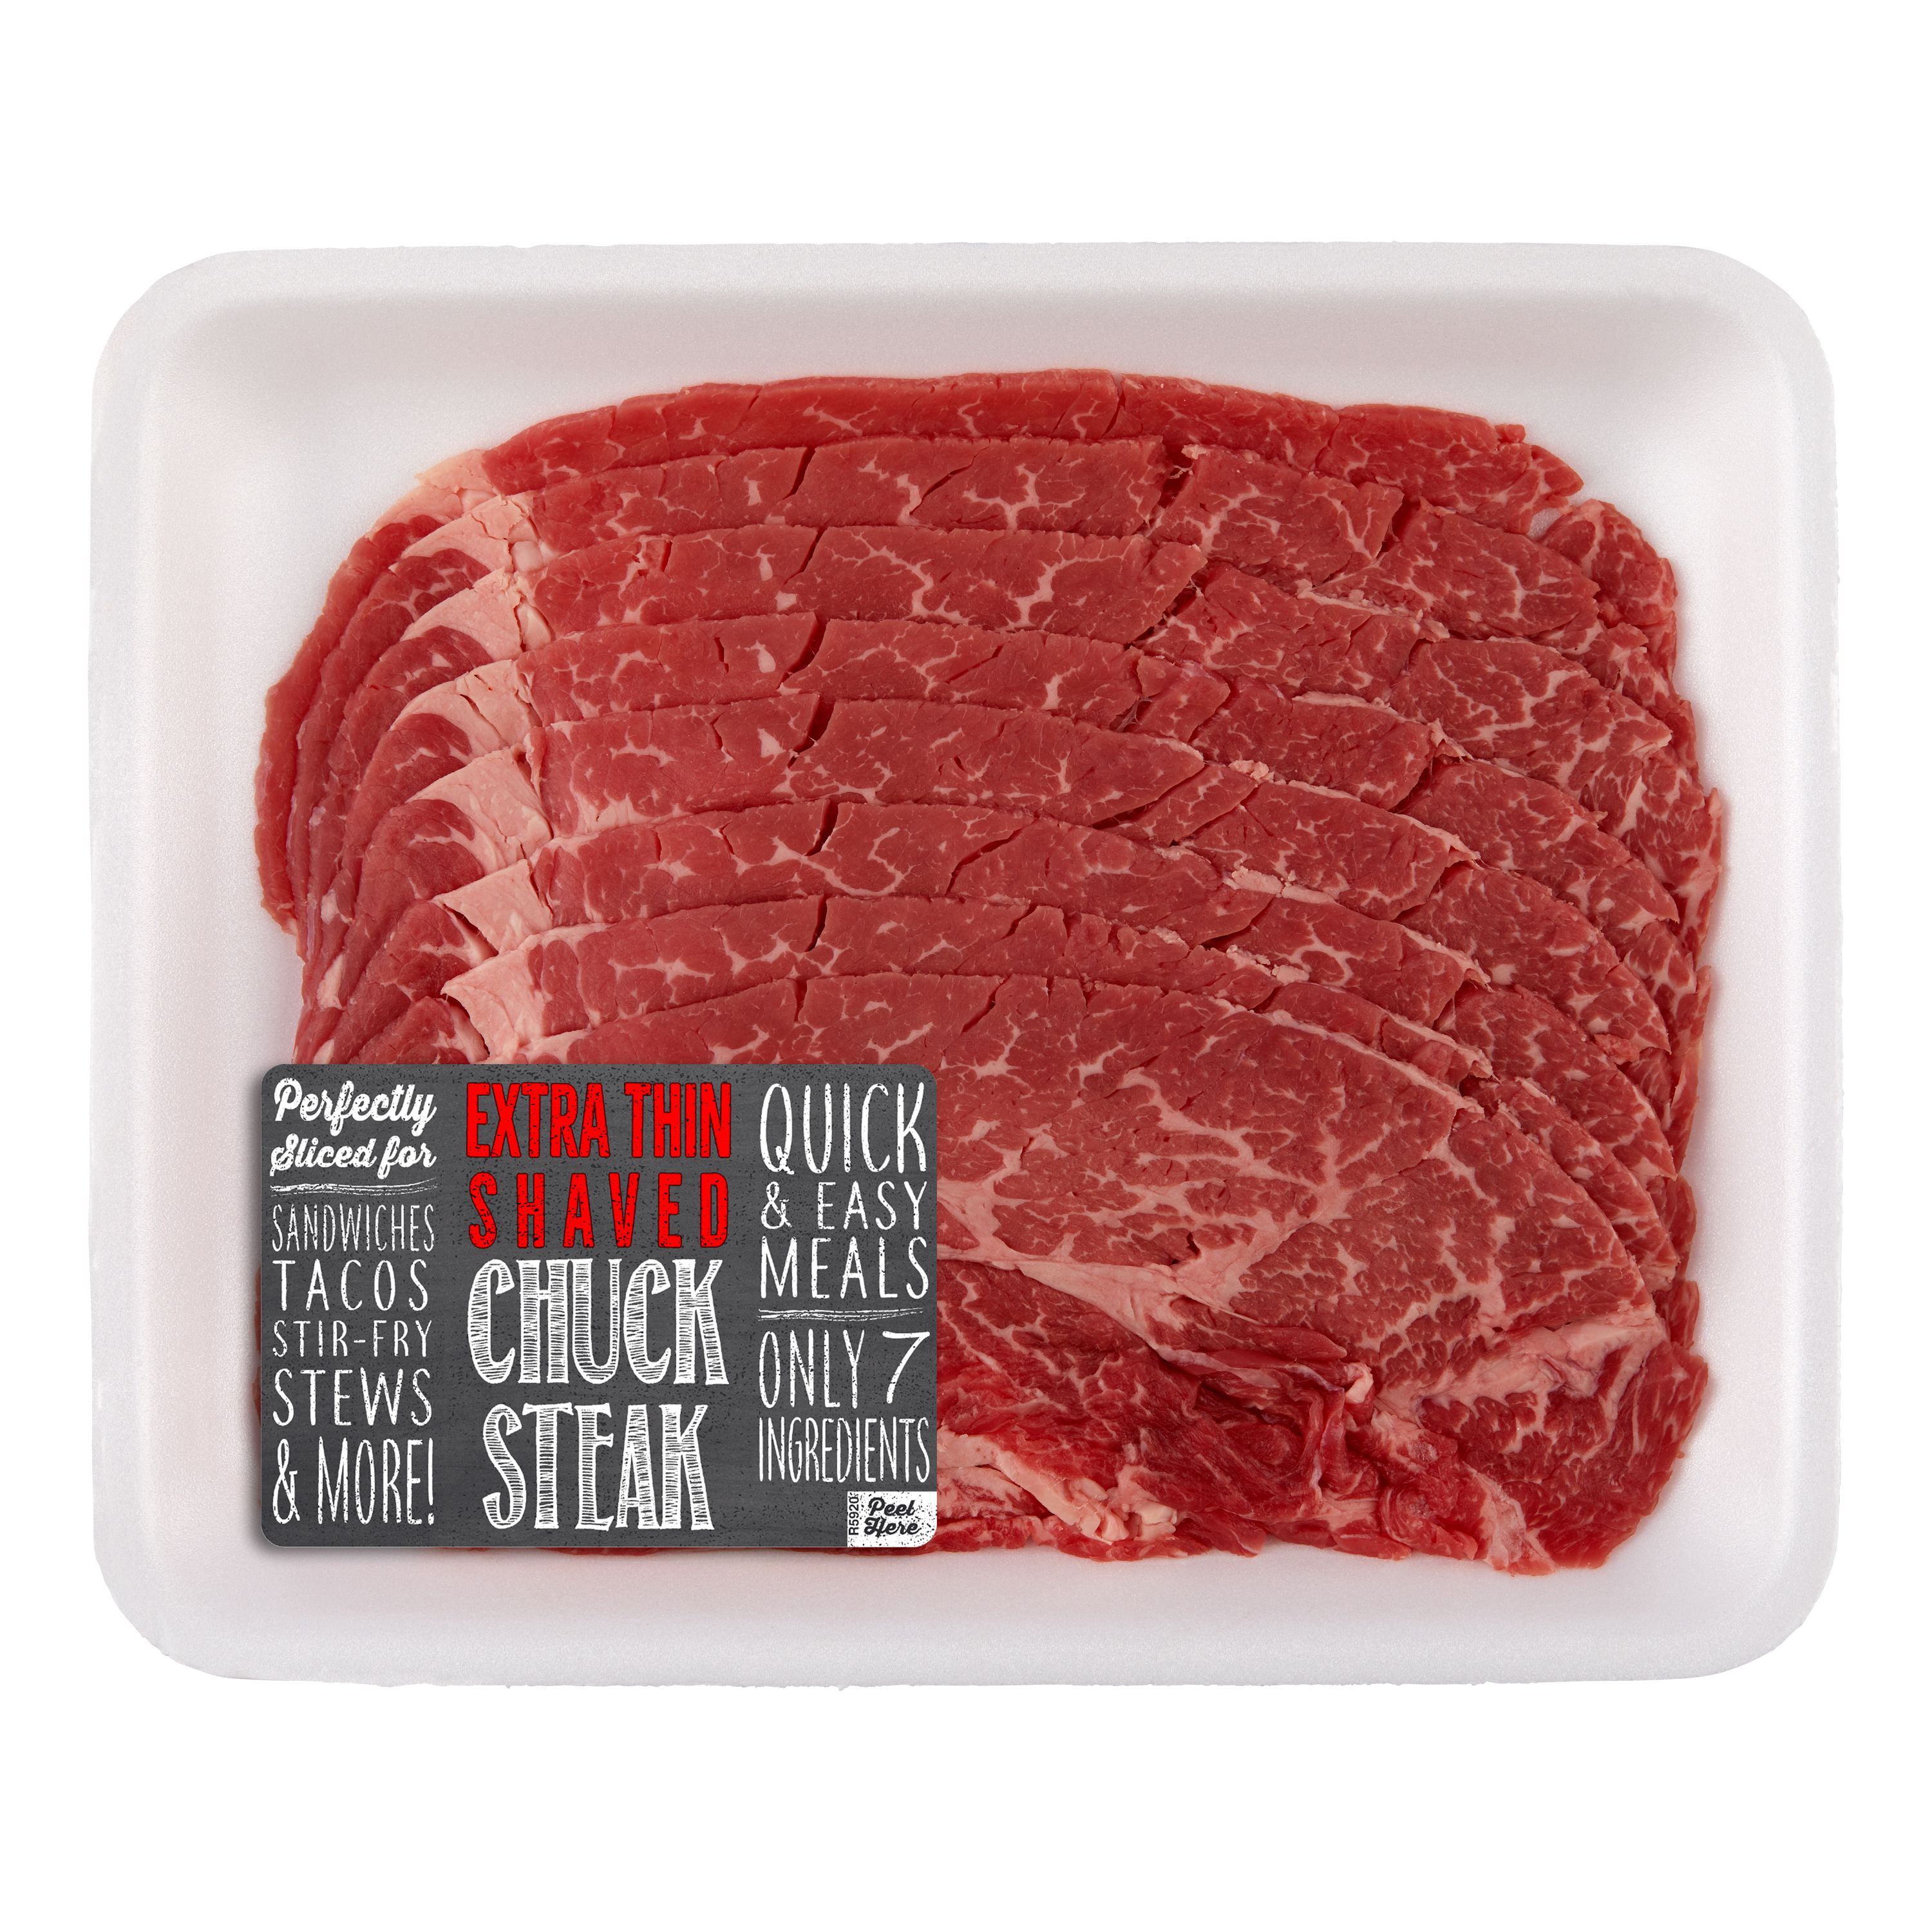 Beef Chuck Shaved Steak, 0.79 - 2.1 lb - Walmart.com - Walmart.com